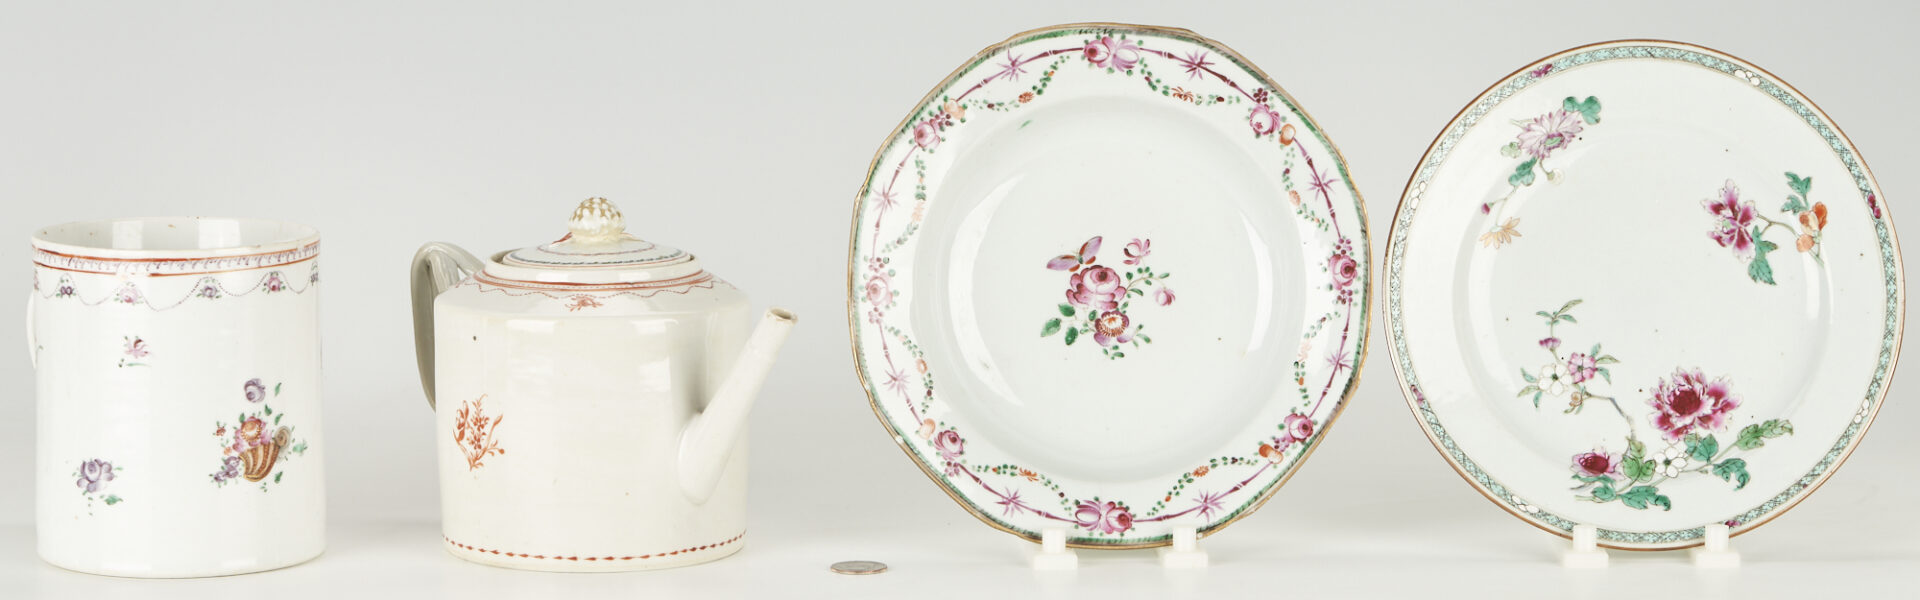 Lot 197: 4 Chinese Export Famille Rose Porcelain Items: Tankard, Teapot & Plates